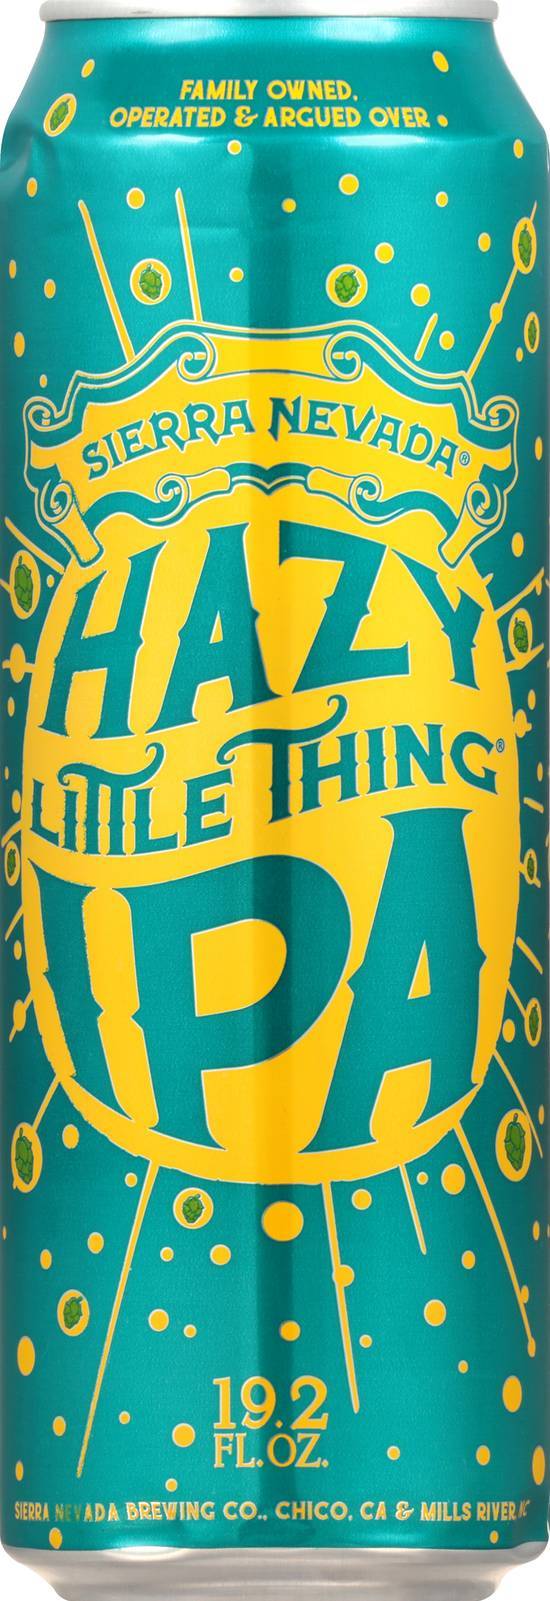 Sierra Nevada Hazy Little Thing Ipa Craft Beer (19.2 fl oz)